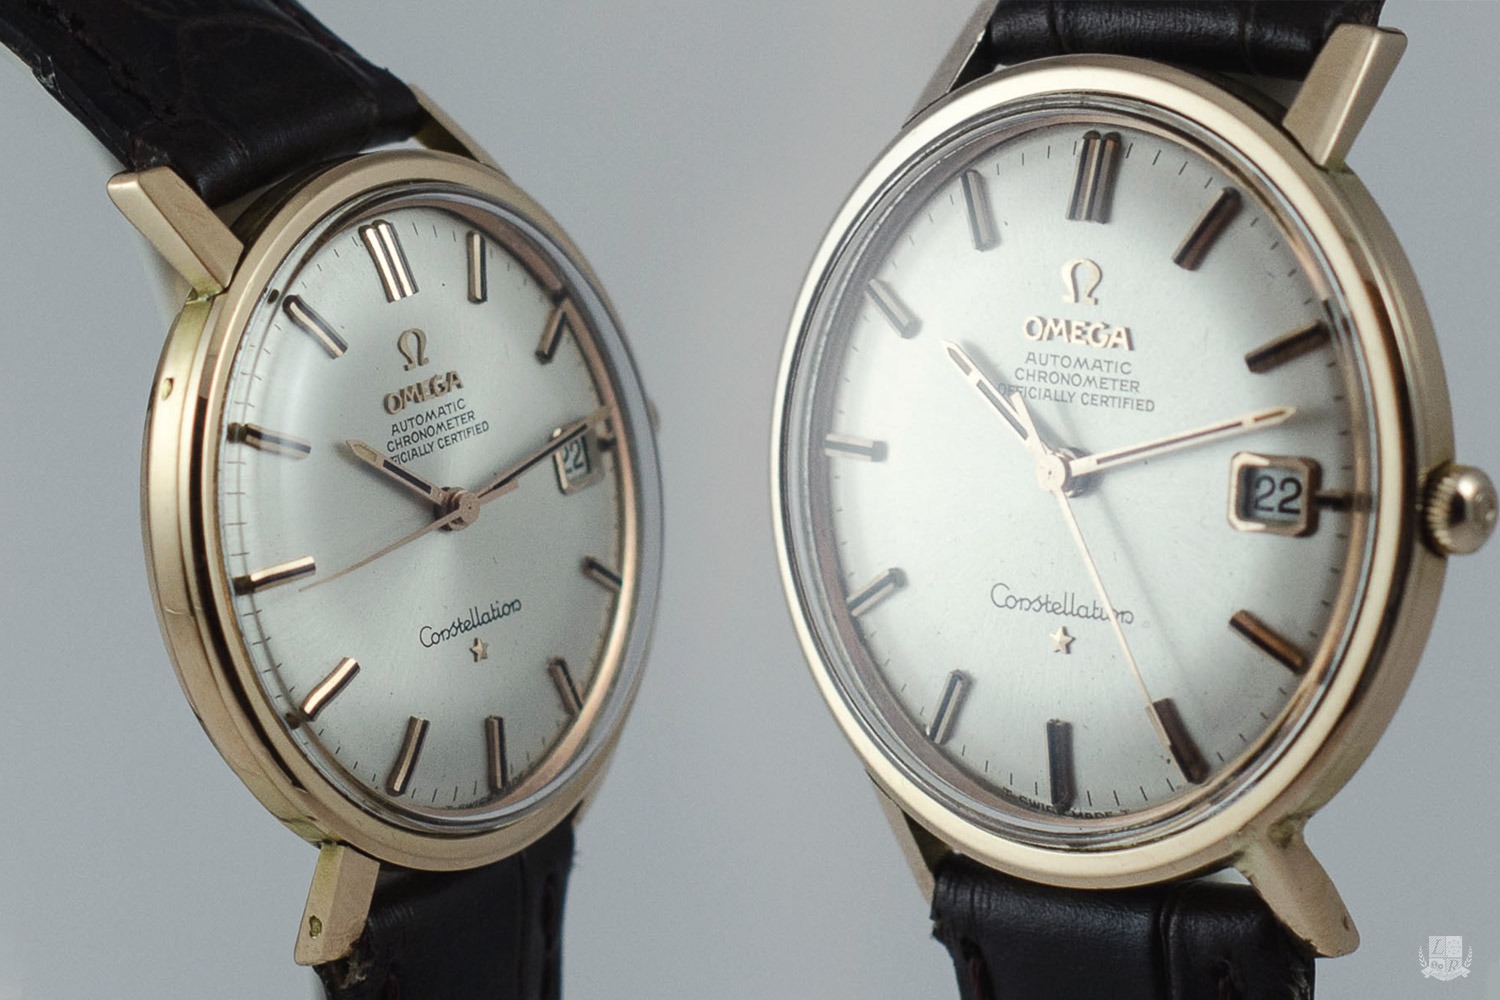 Vintage Omega Constellation - Chronometer Certified - Sides